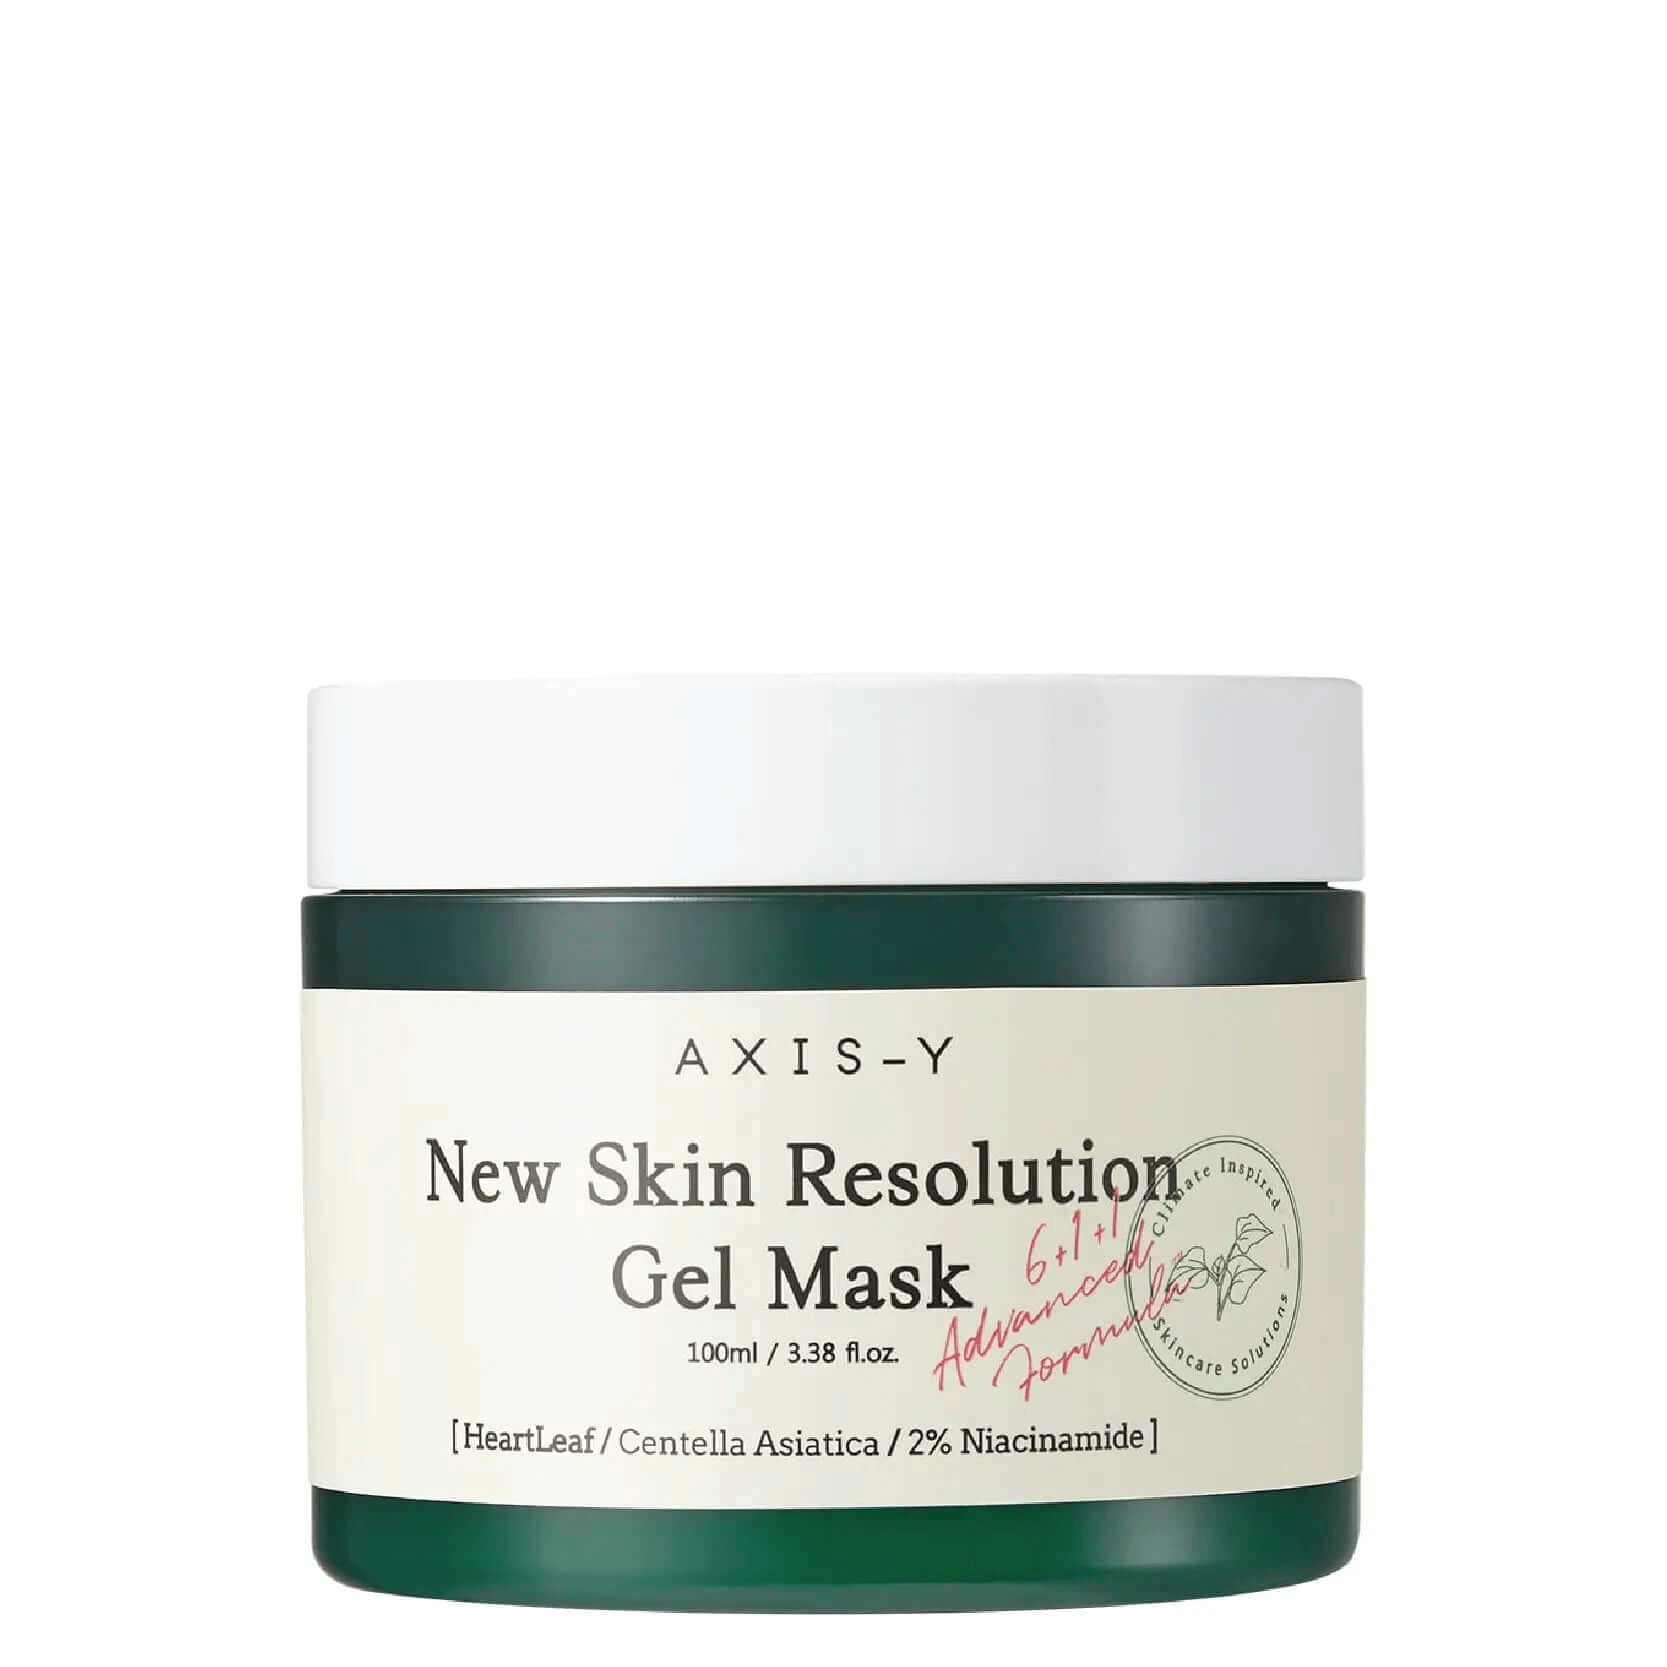 Axis-Y New Skin Resolution Gel Mask Axis-Y